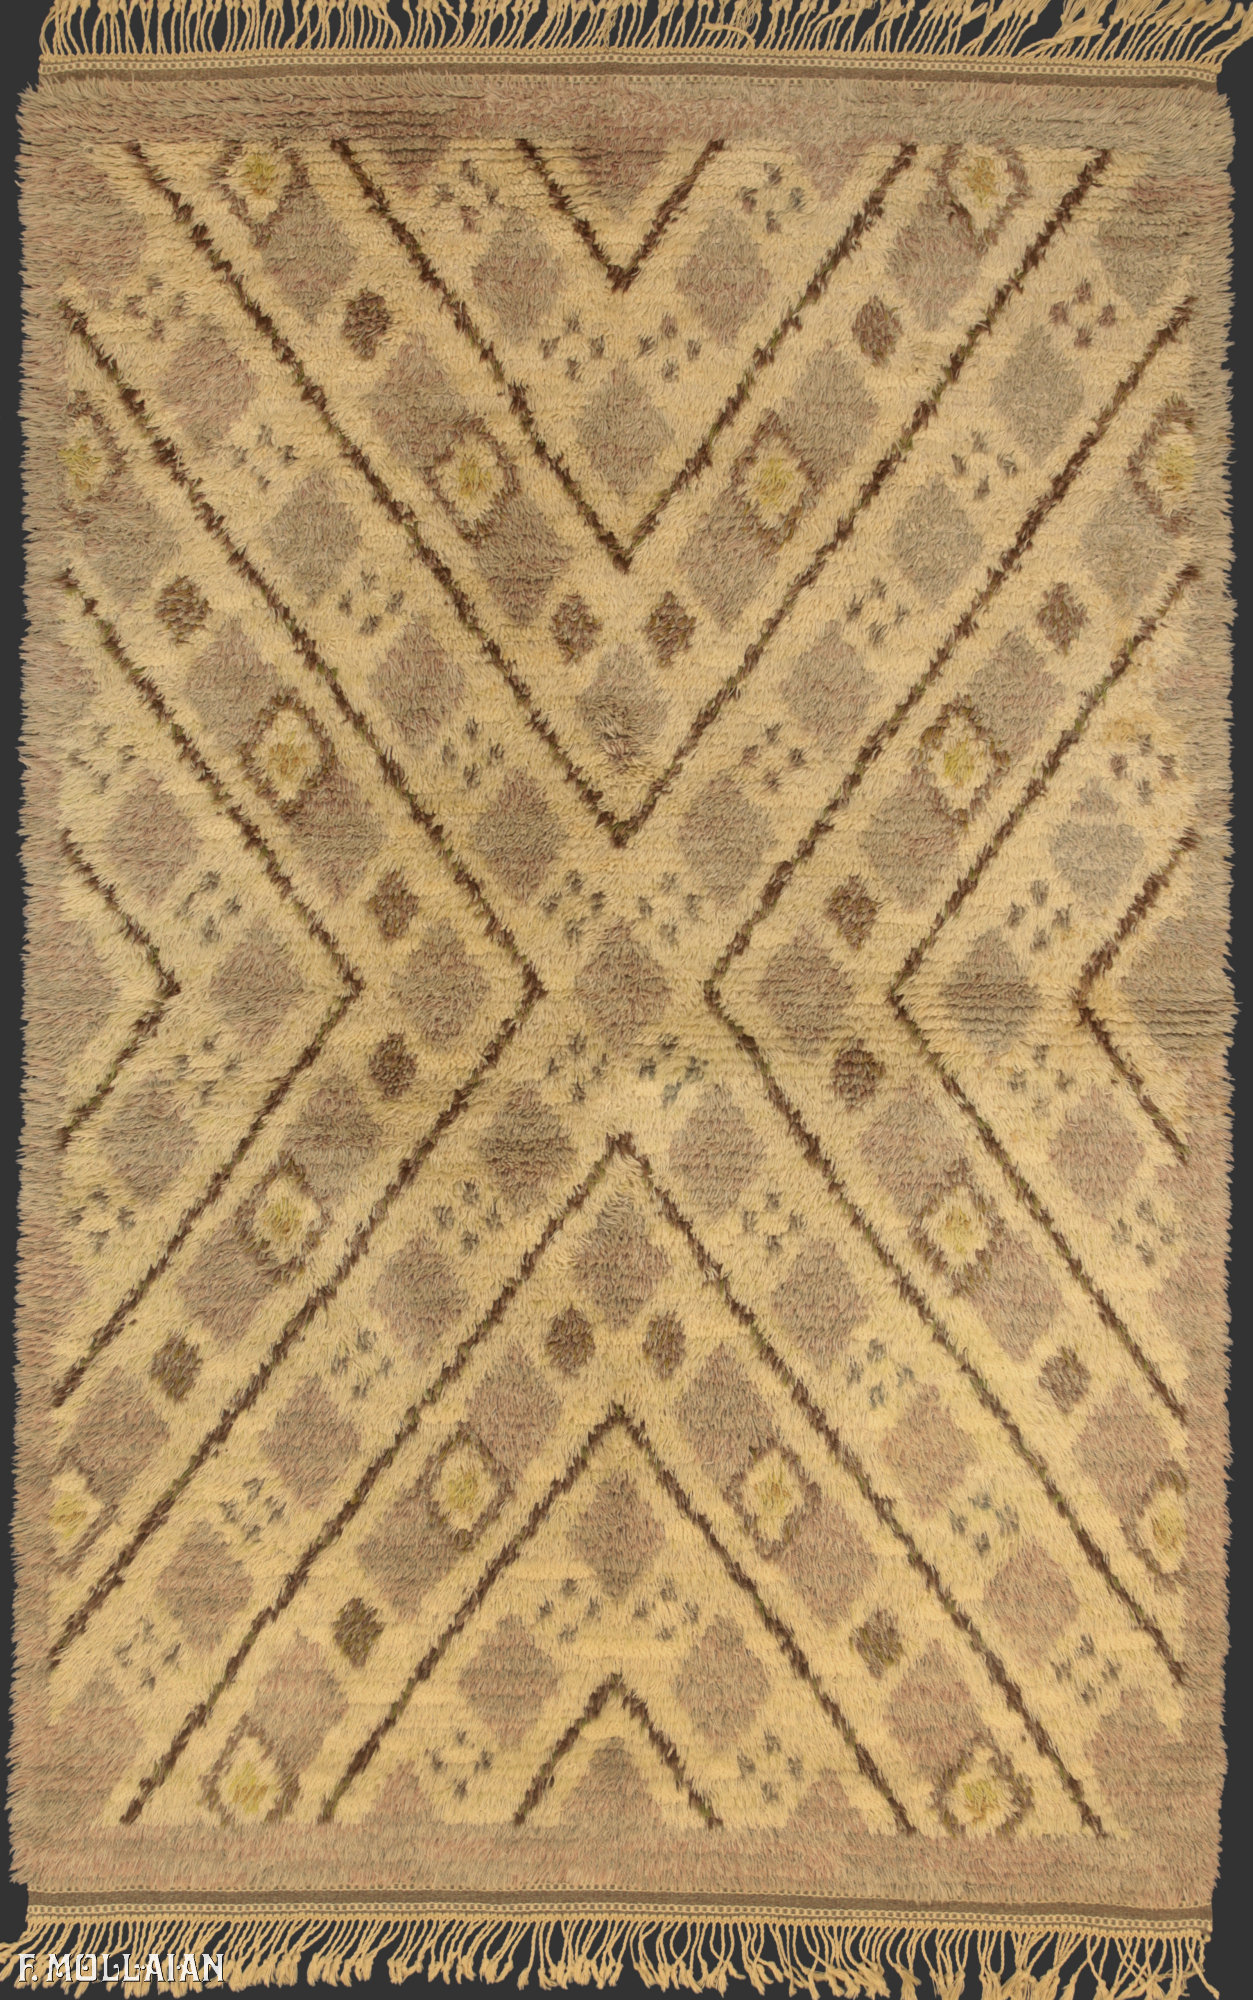 Tapis Suédois Semi-Antique Rya n°:65690024